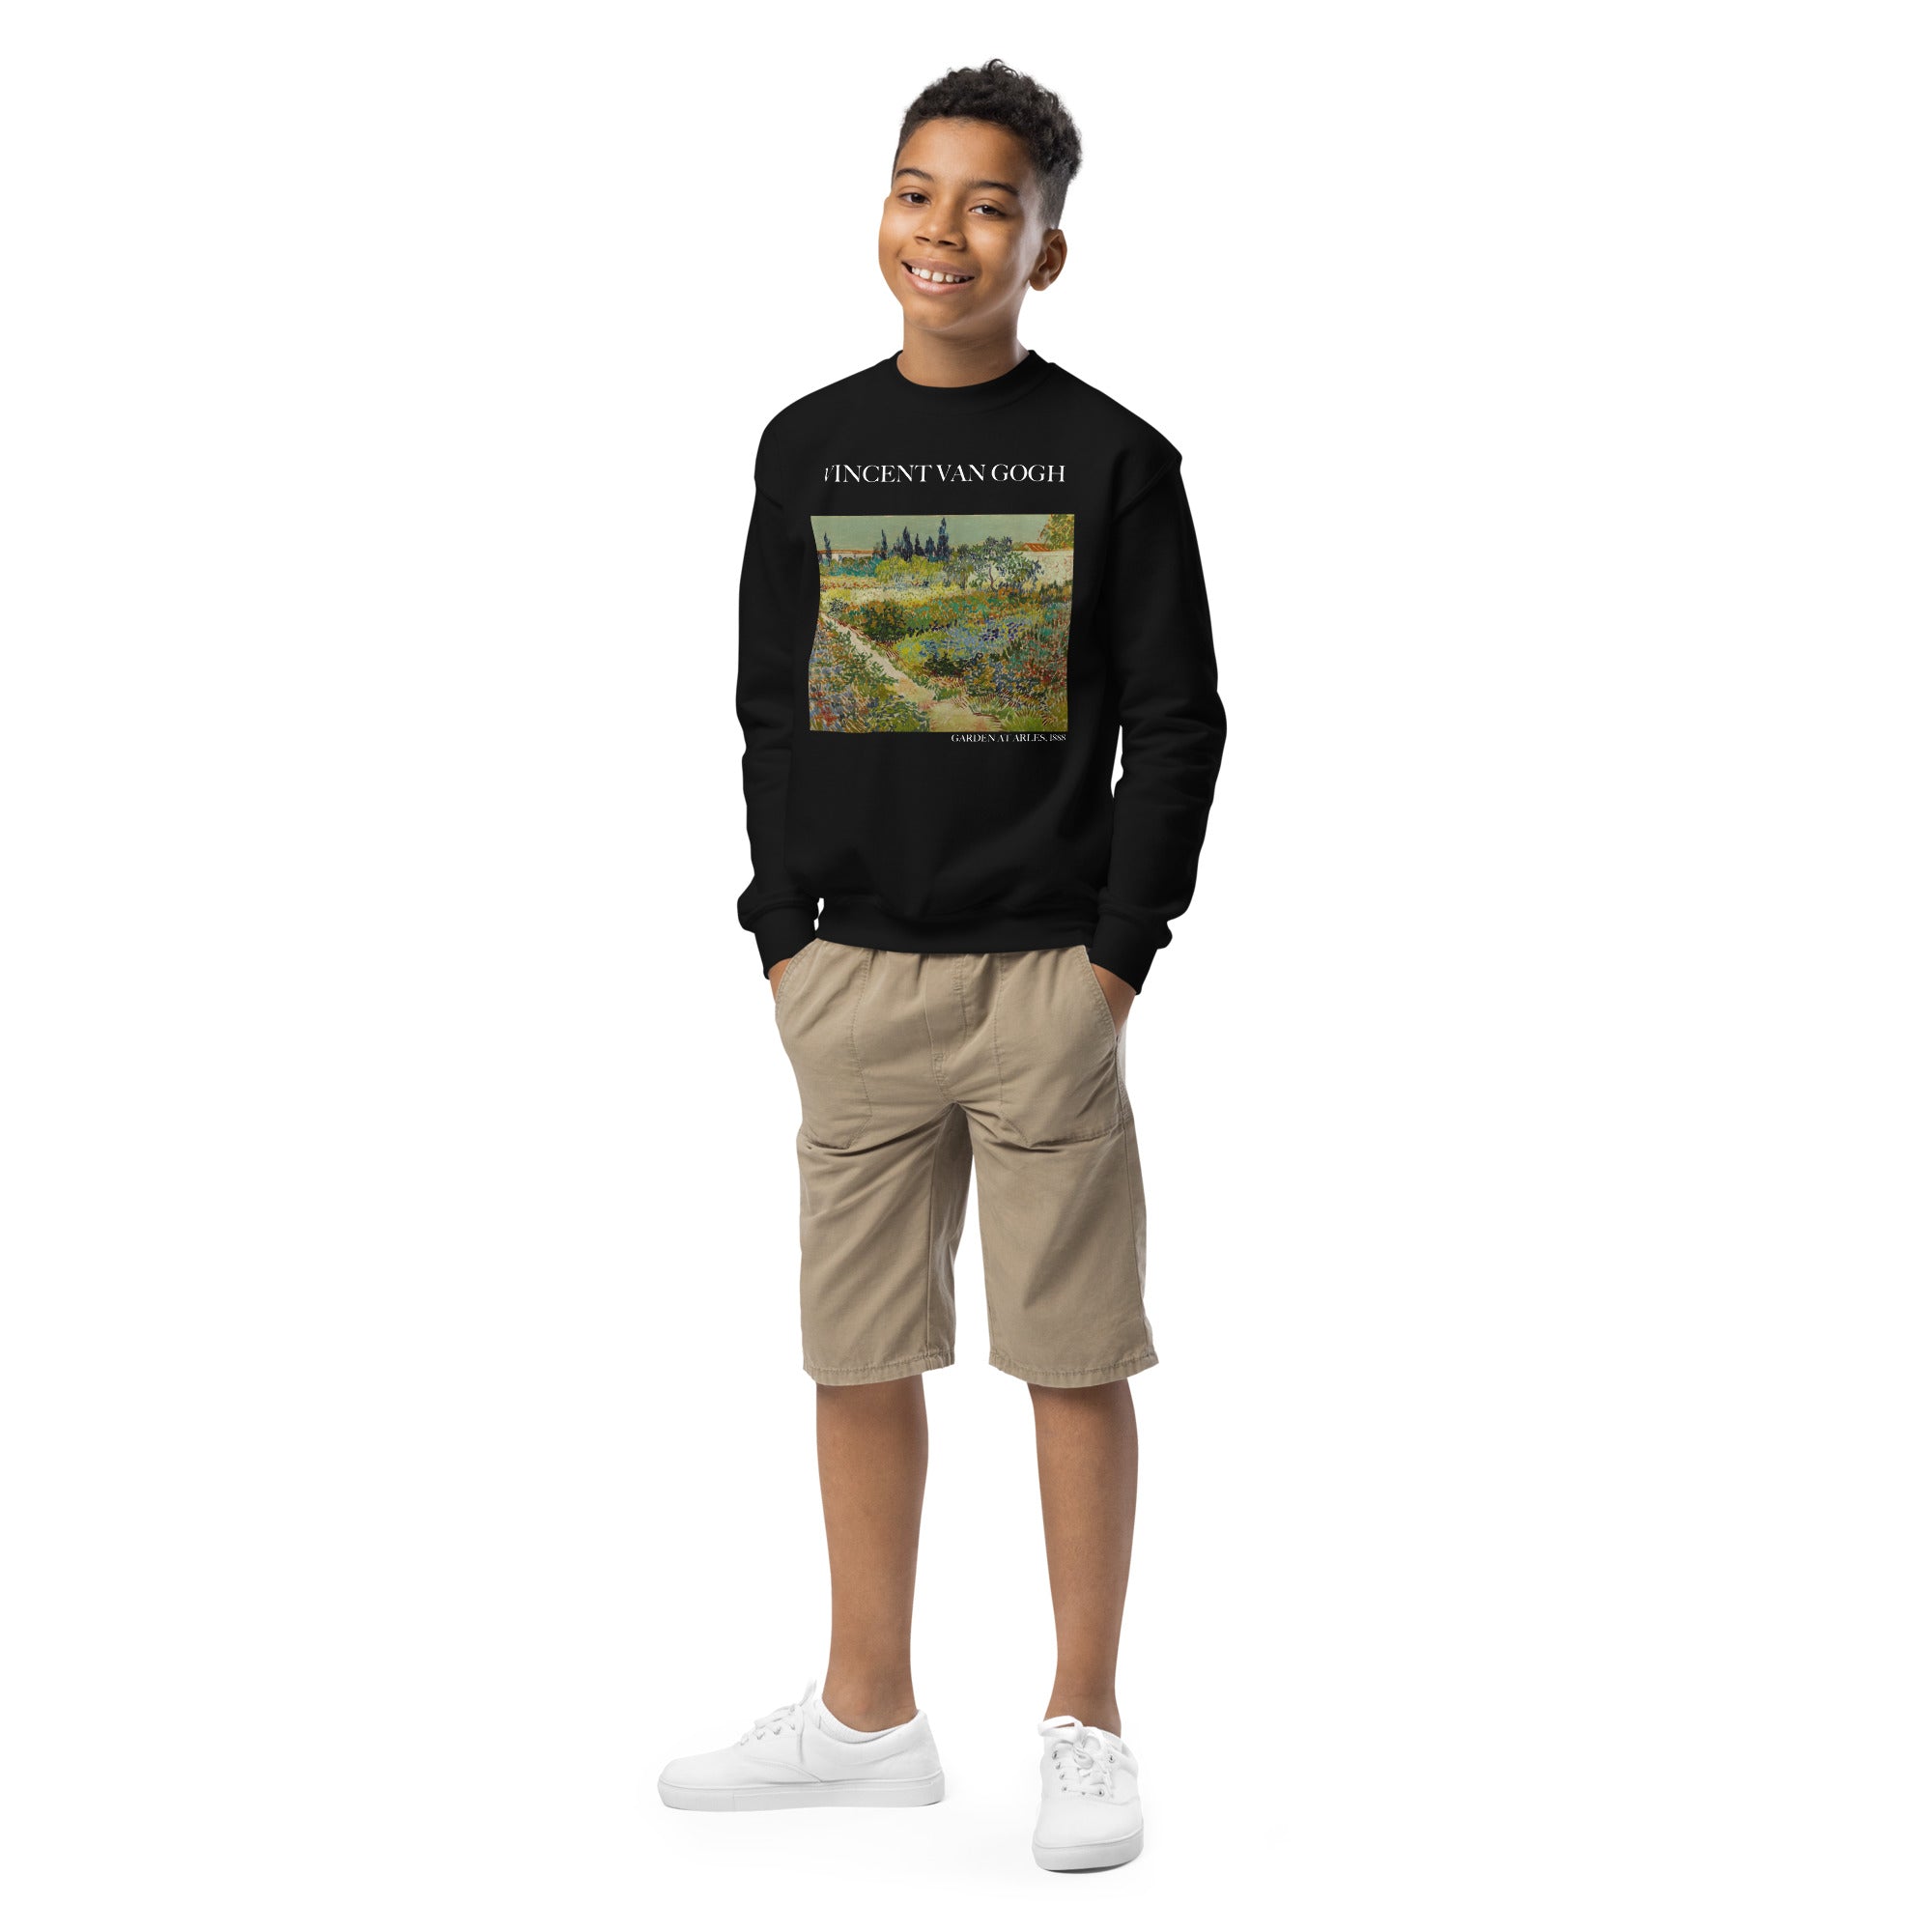 Vincent van Gogh 'Garden at Arles' Famous Painting Crewneck Sweatshirt | Premium Youth Art Sweatshirt